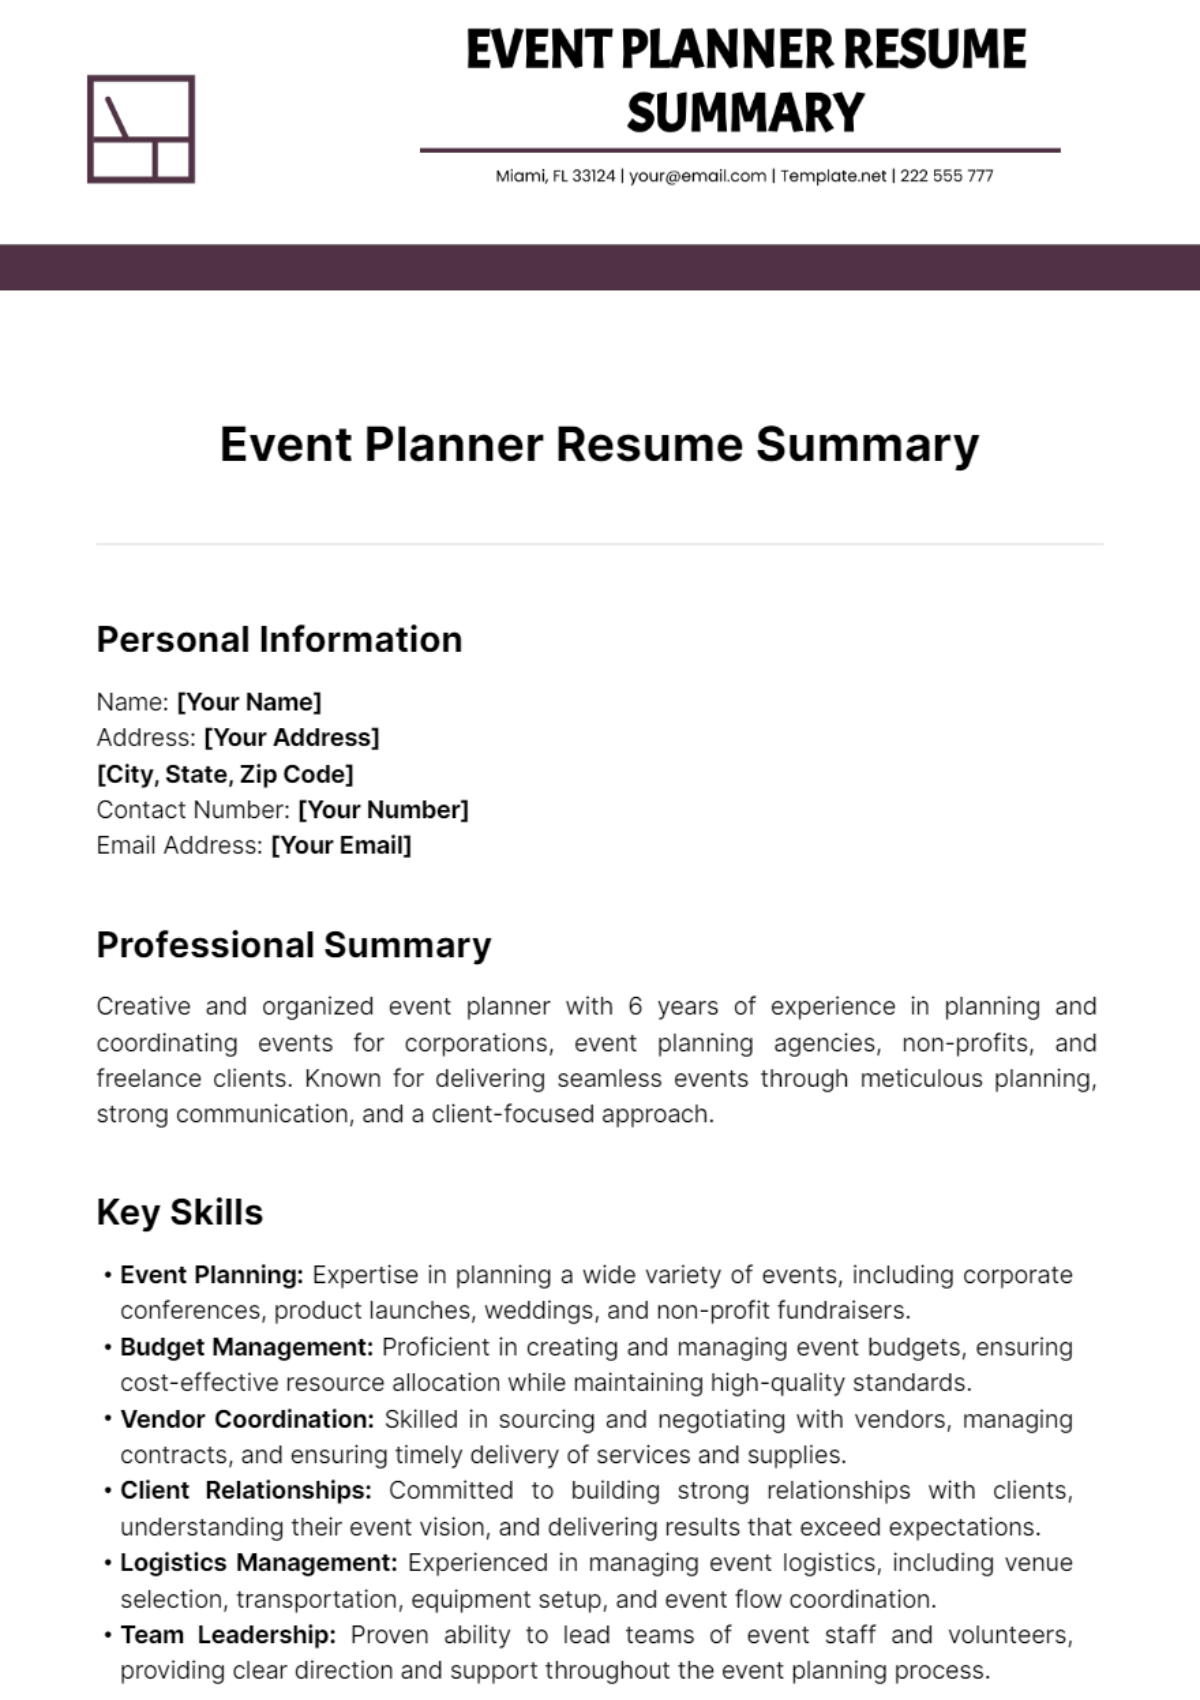 Event Planner Resume Summary Template